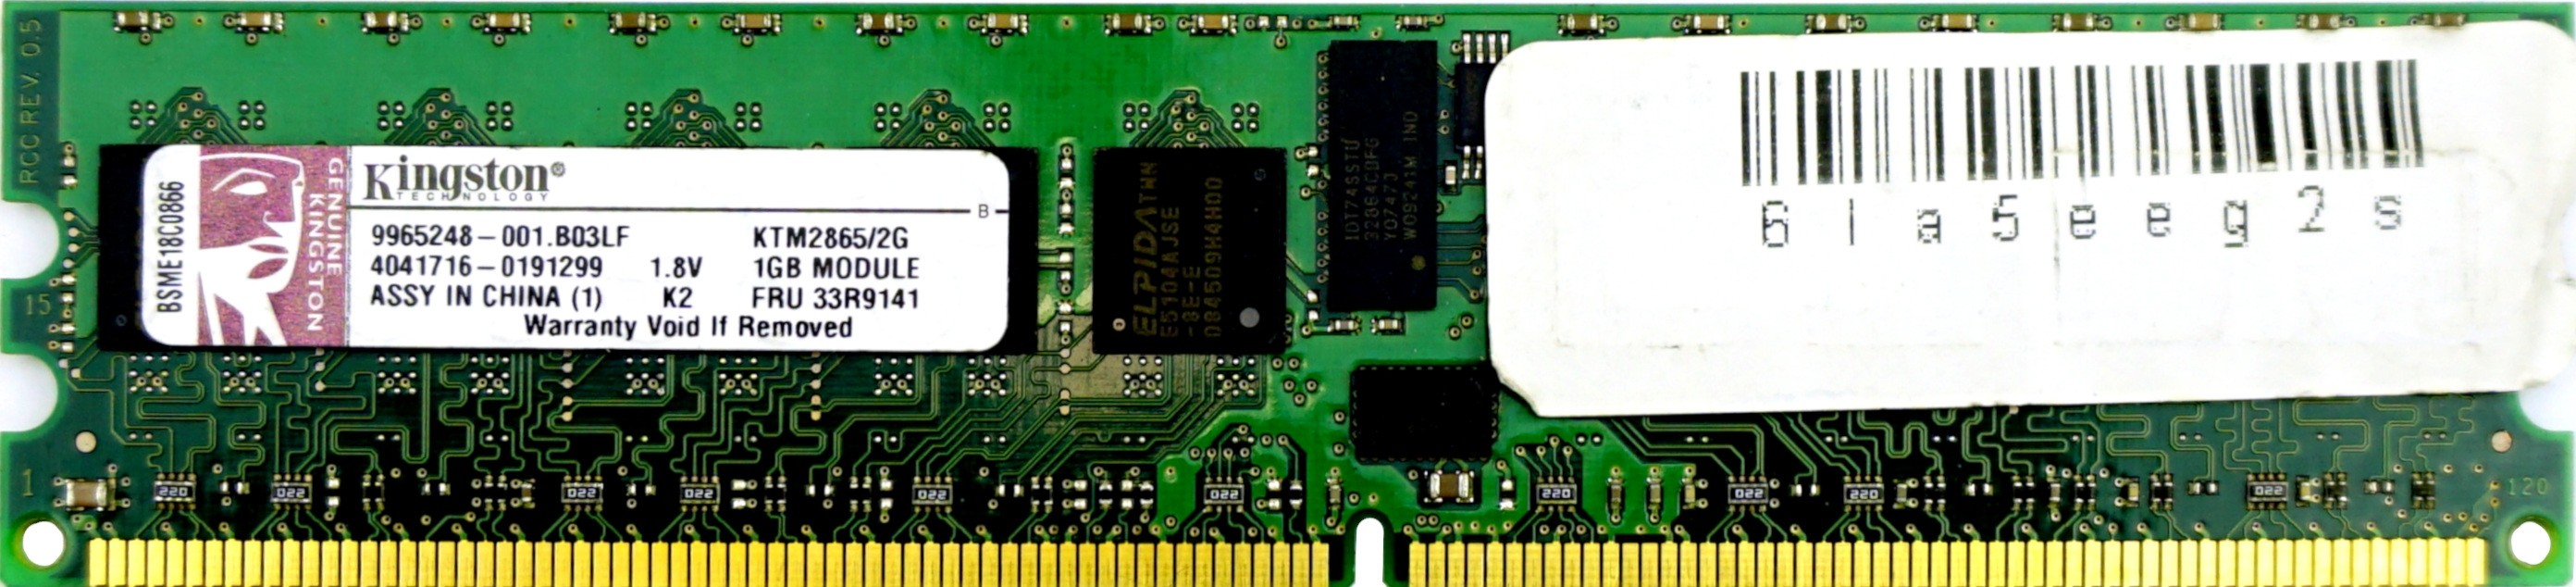 Kingston - 1GB PC2-3200R (DDR2-400Mhz, 1RX4)